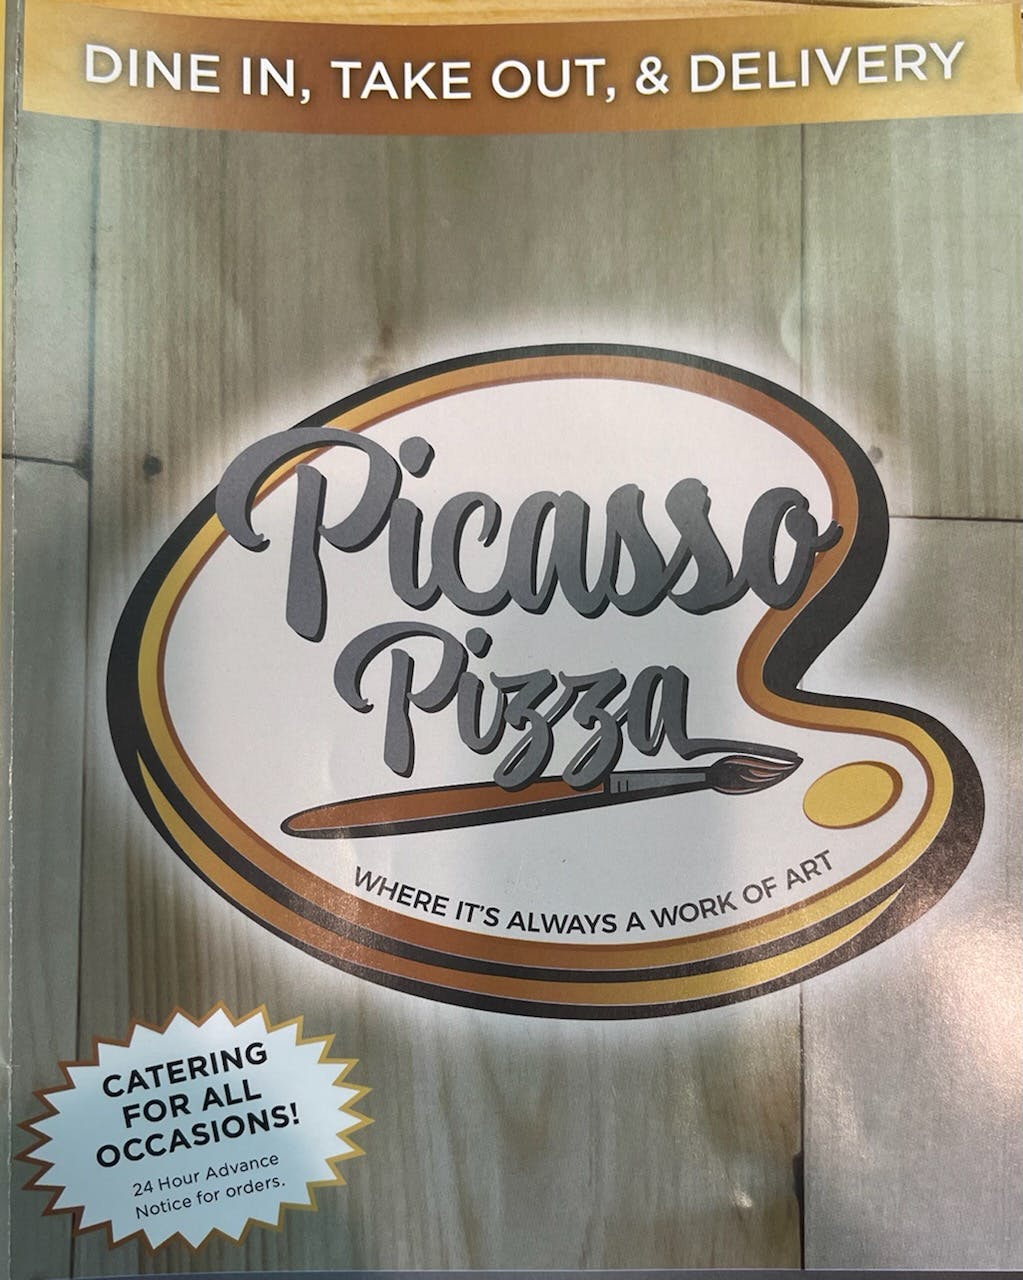 Picasso Pizza hero